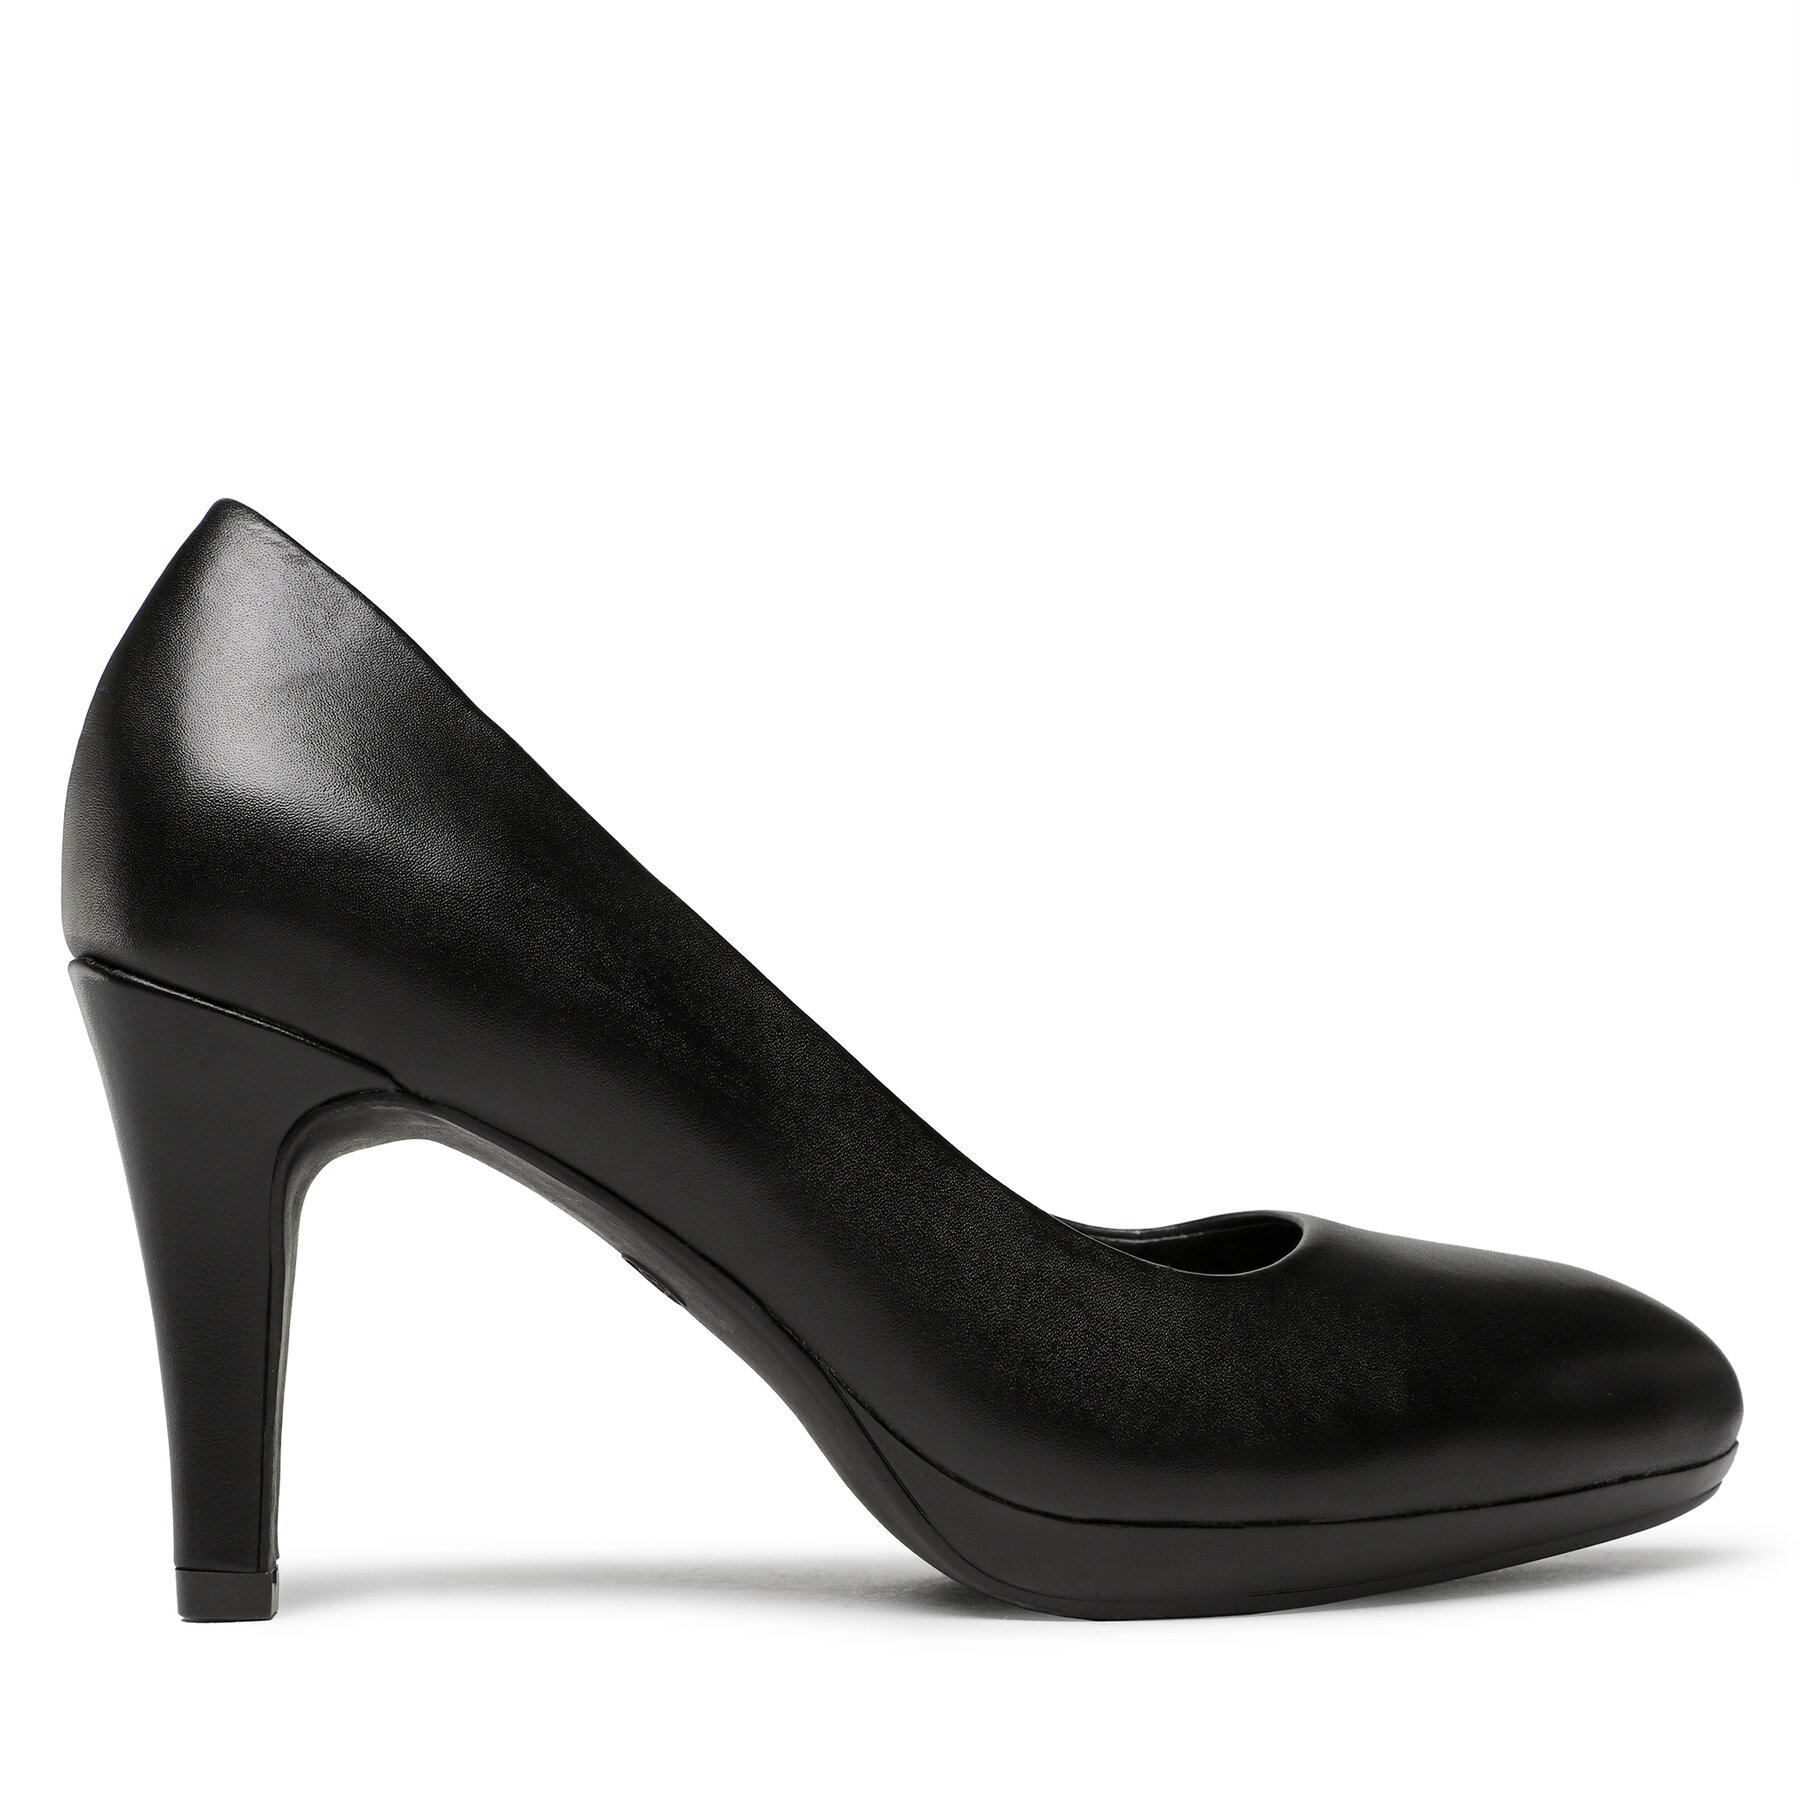 Cipele Lasocki WYL2948-1Z Black